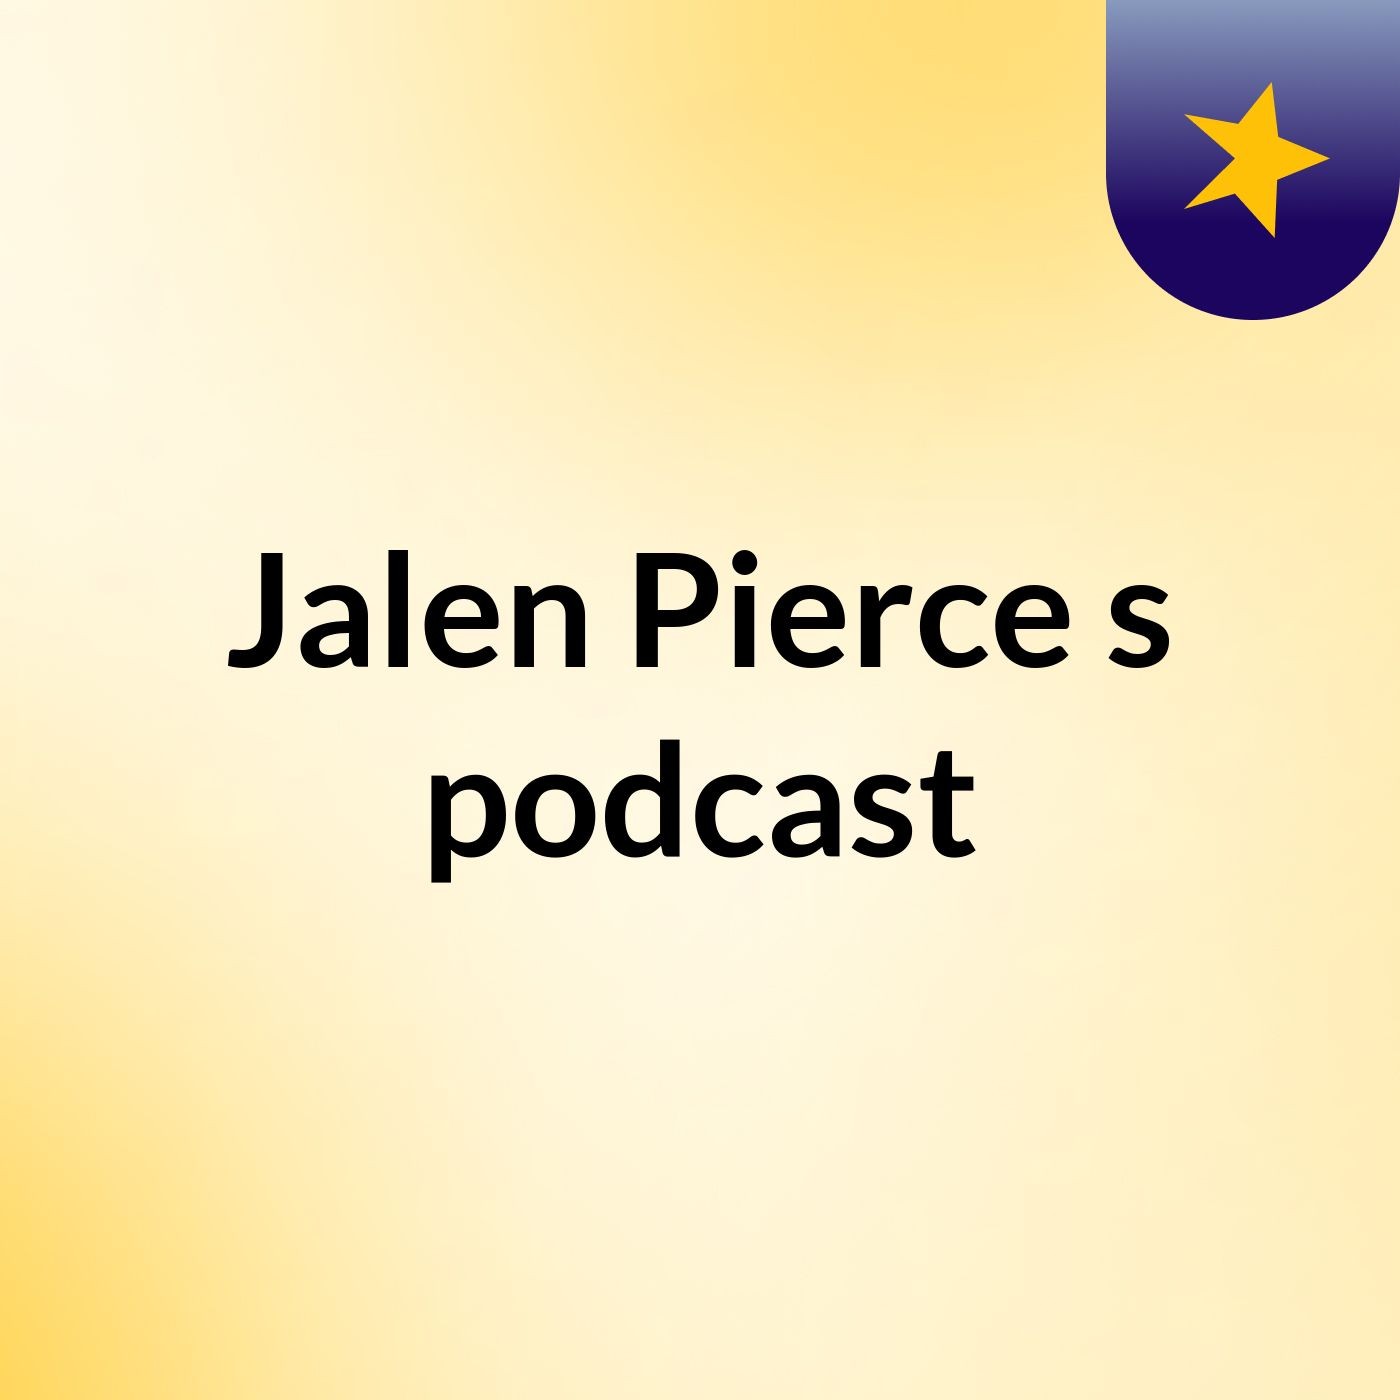 Episode 6 - Jalen Pierce's podcast